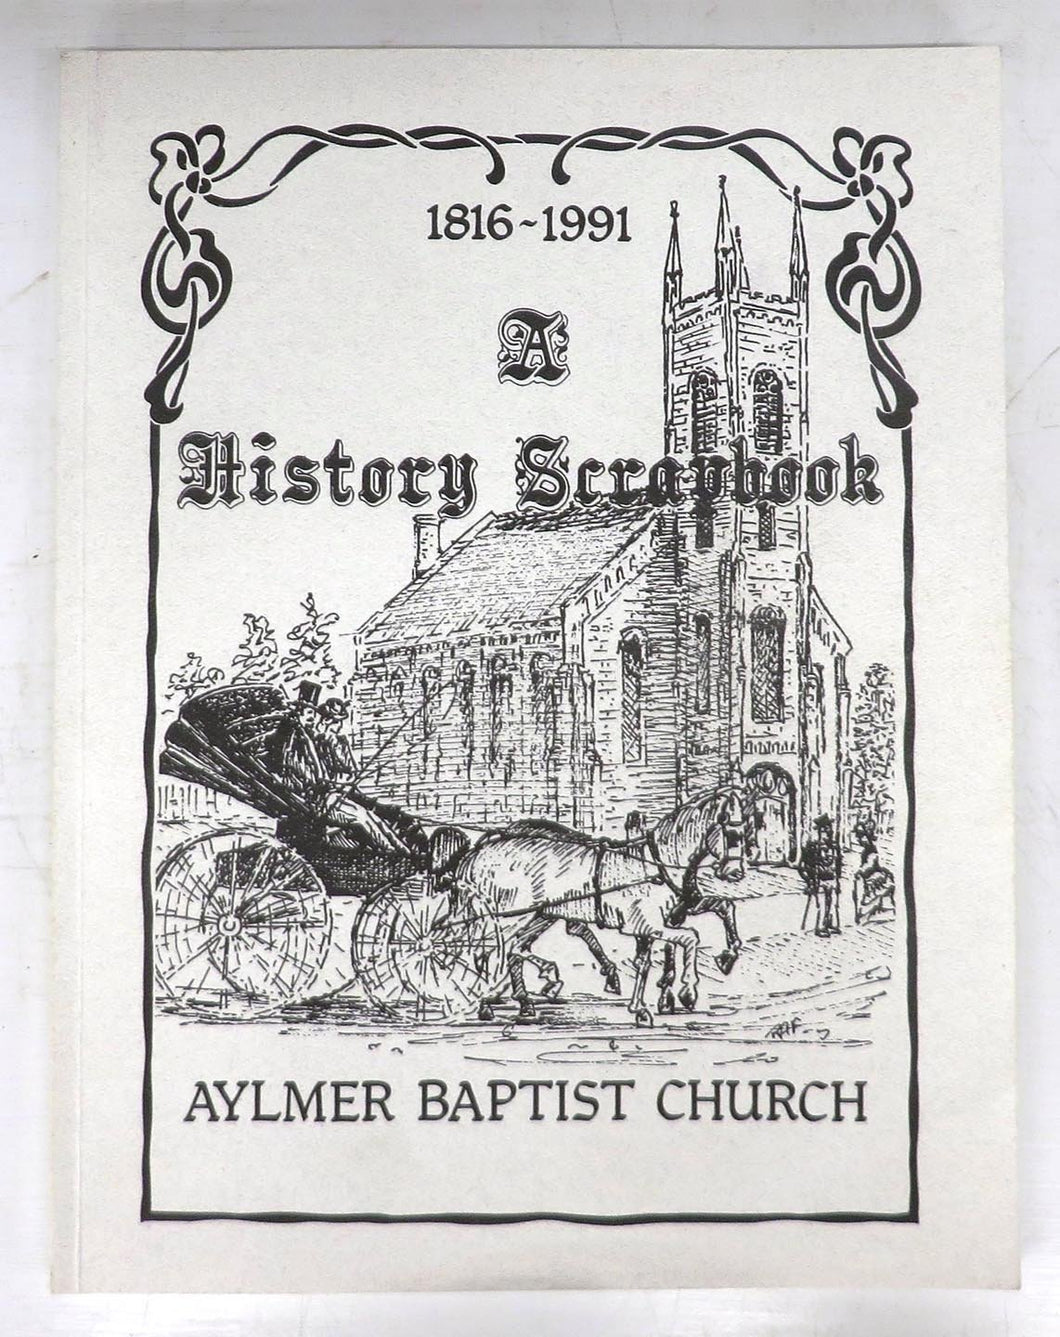 Aylmer Baptist Church 1816-1991: A History Scrapbook